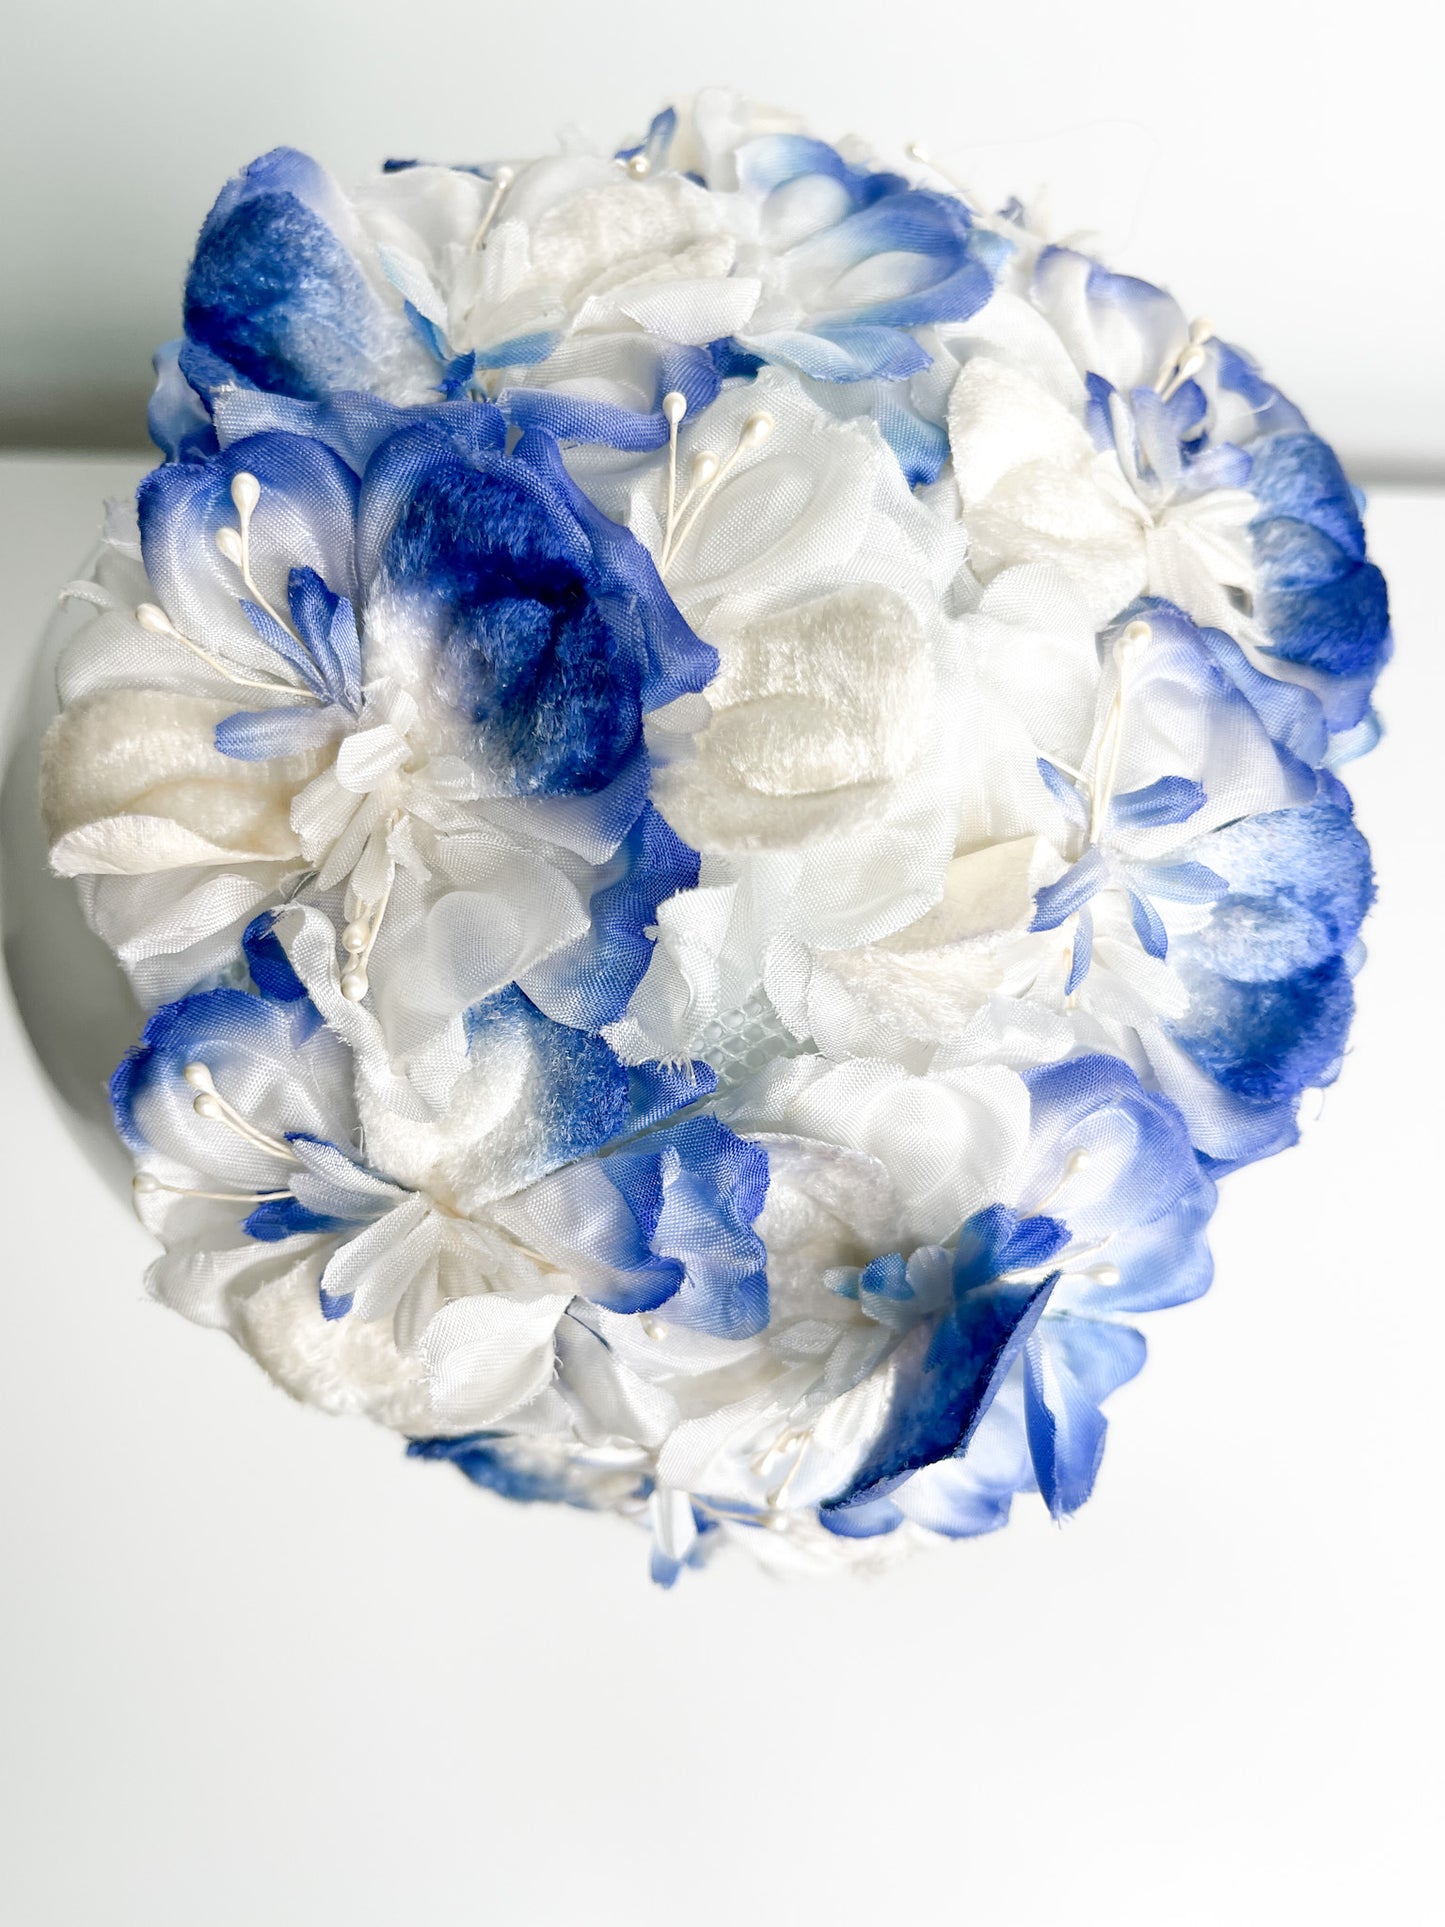 Vintage 1950s Blue Floral Fascinator with Pearl Detailing| Vintage Wedding Fascinator | 1940s Hat | Wedding Hat| Race Track Fascinator